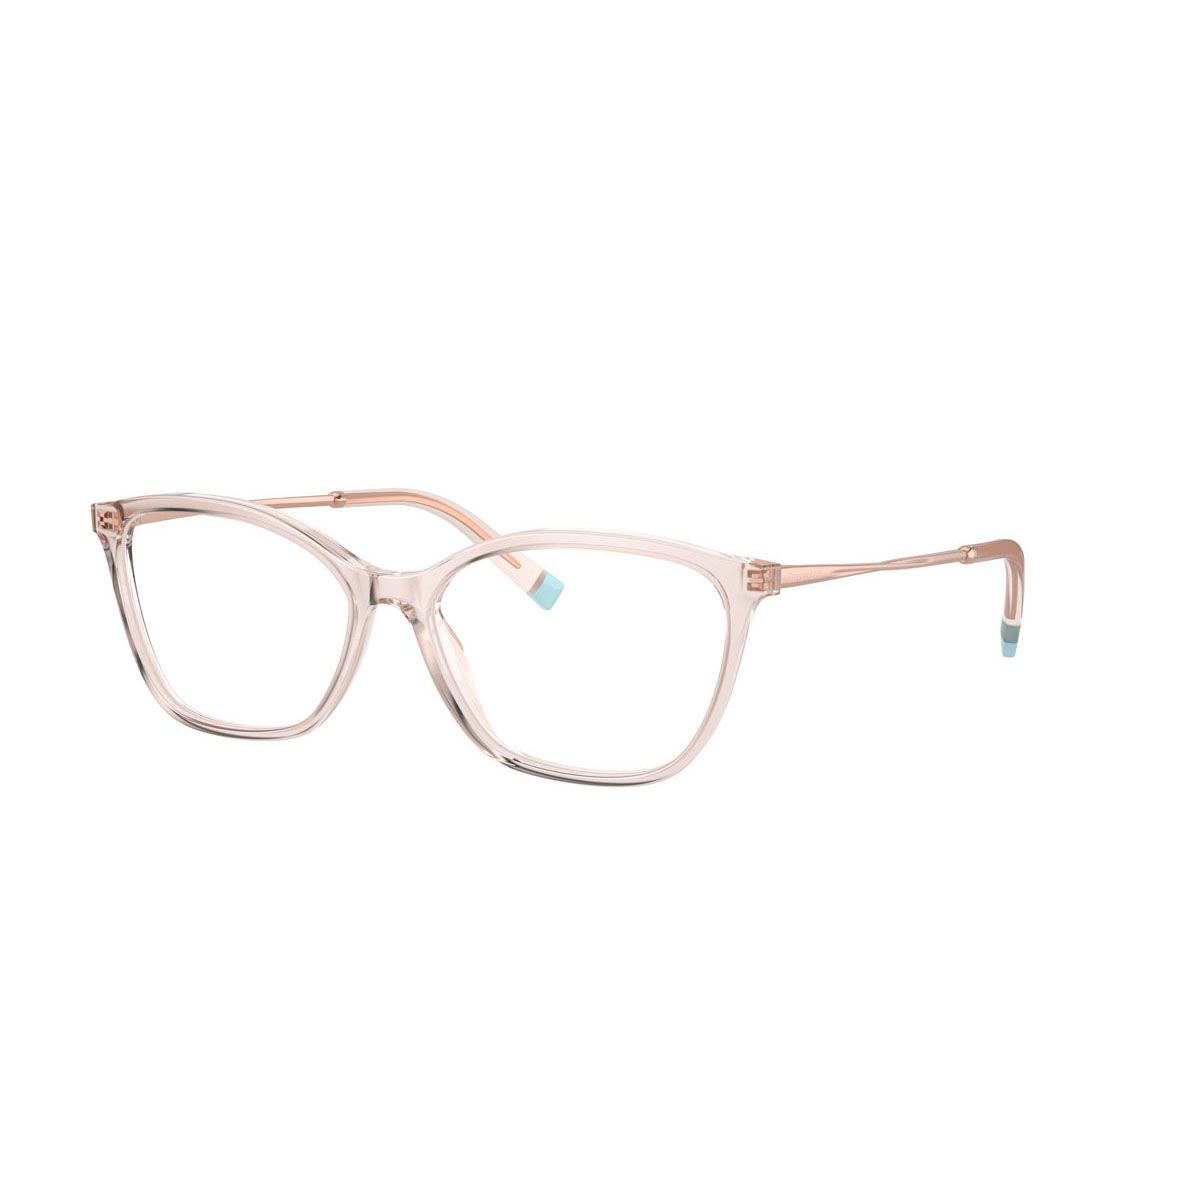 TF2205 Square Eyeglasses 8328 - size  53